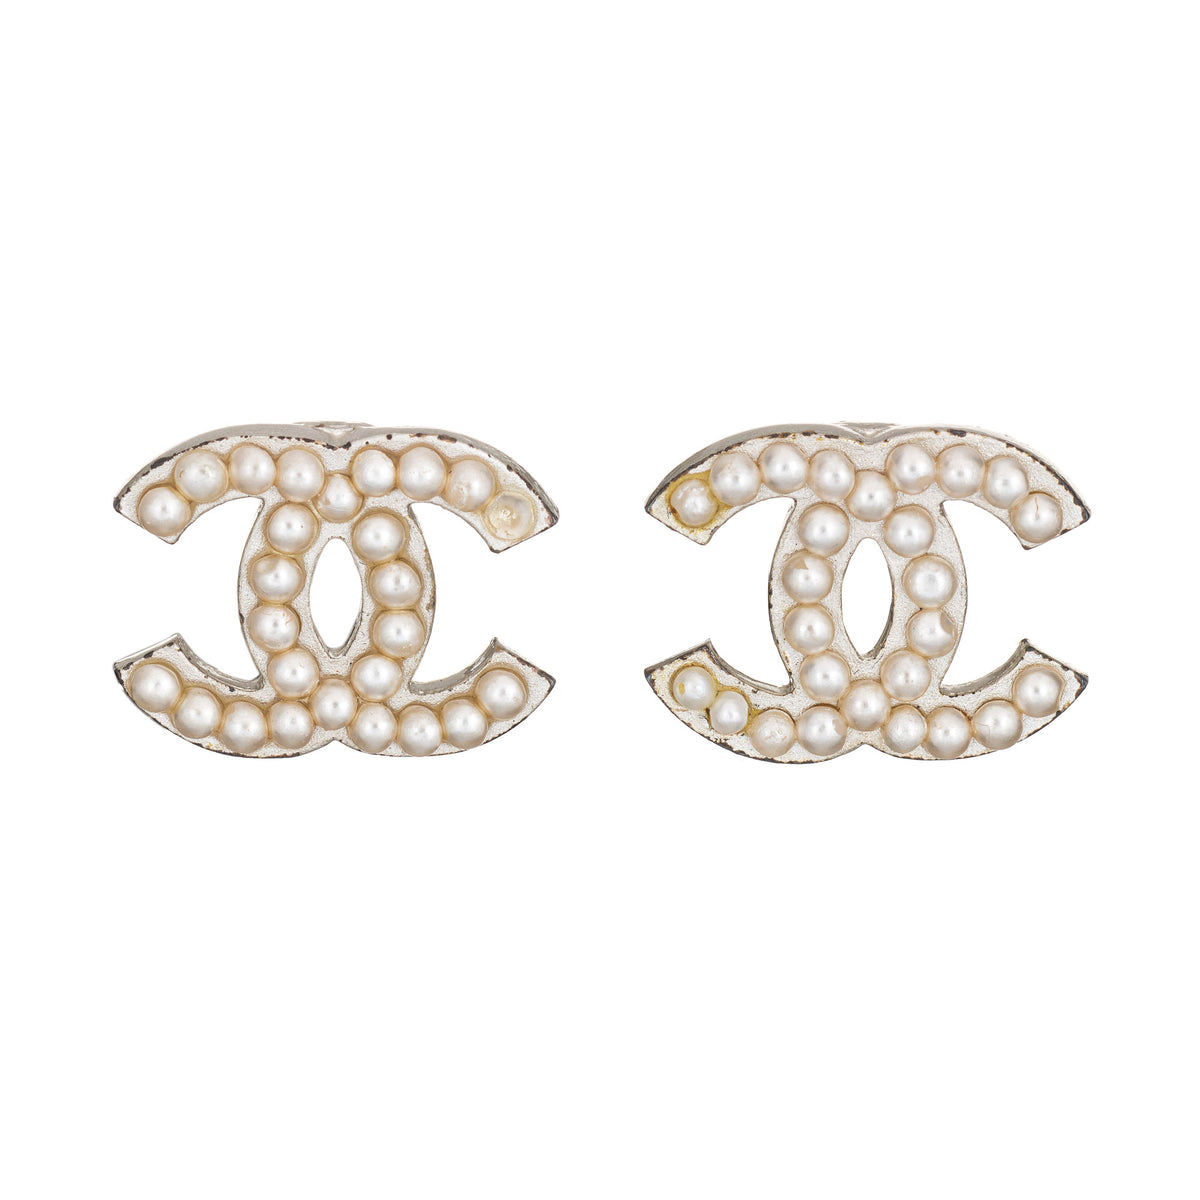 Chanel CC Logo Faux Pearl Earrings Clip On Silver Tone c2003